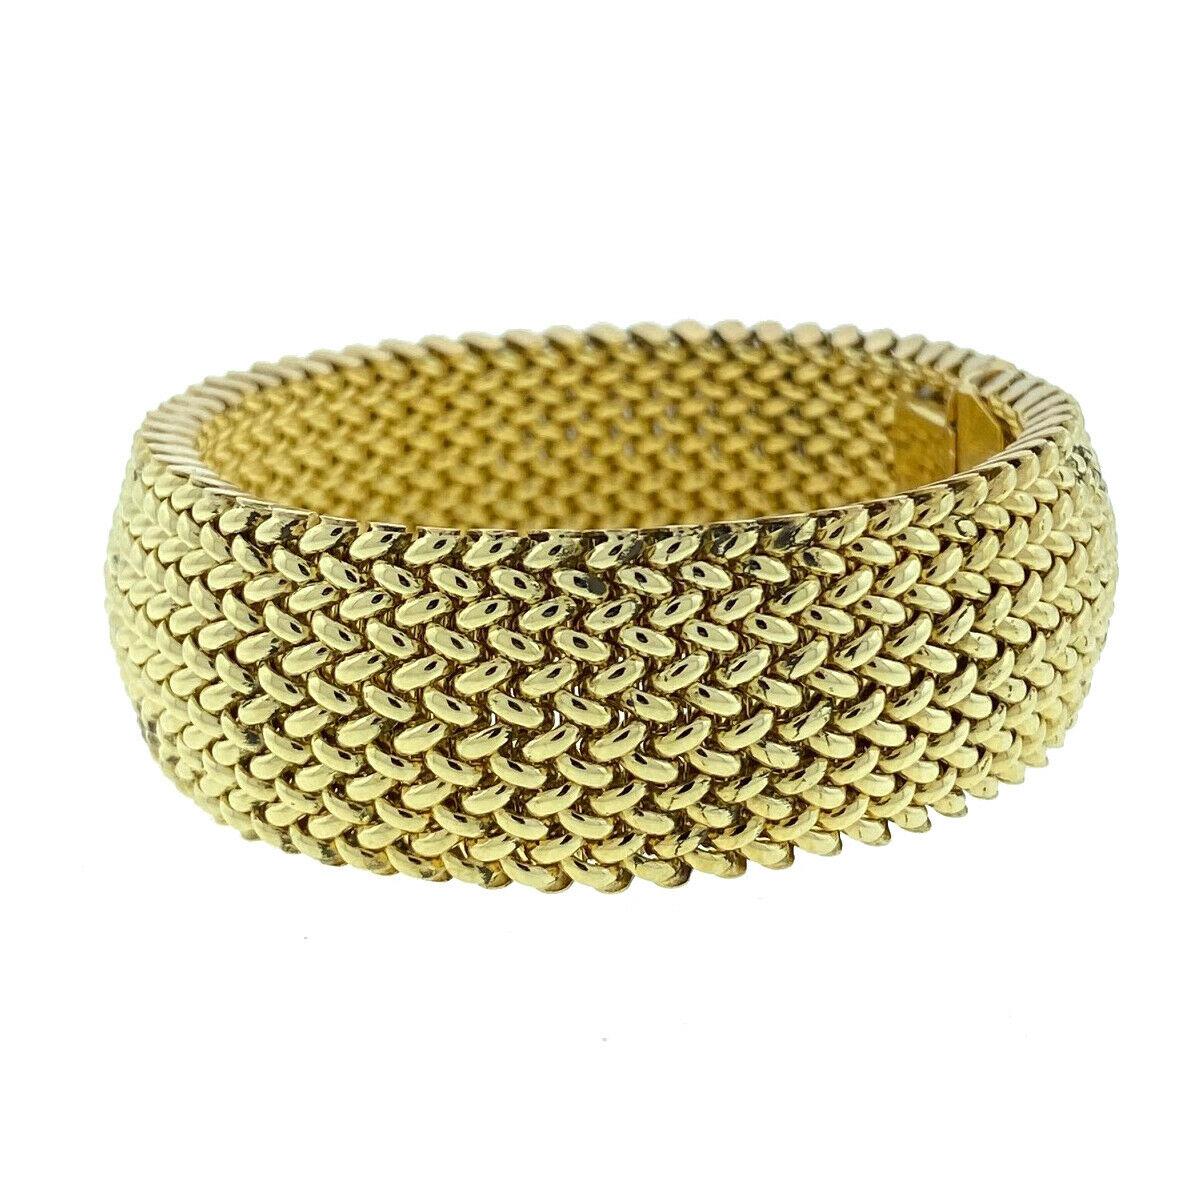 Style - 14k Yellow Gold Wide Mesh Bracelet 
Size - 6.49